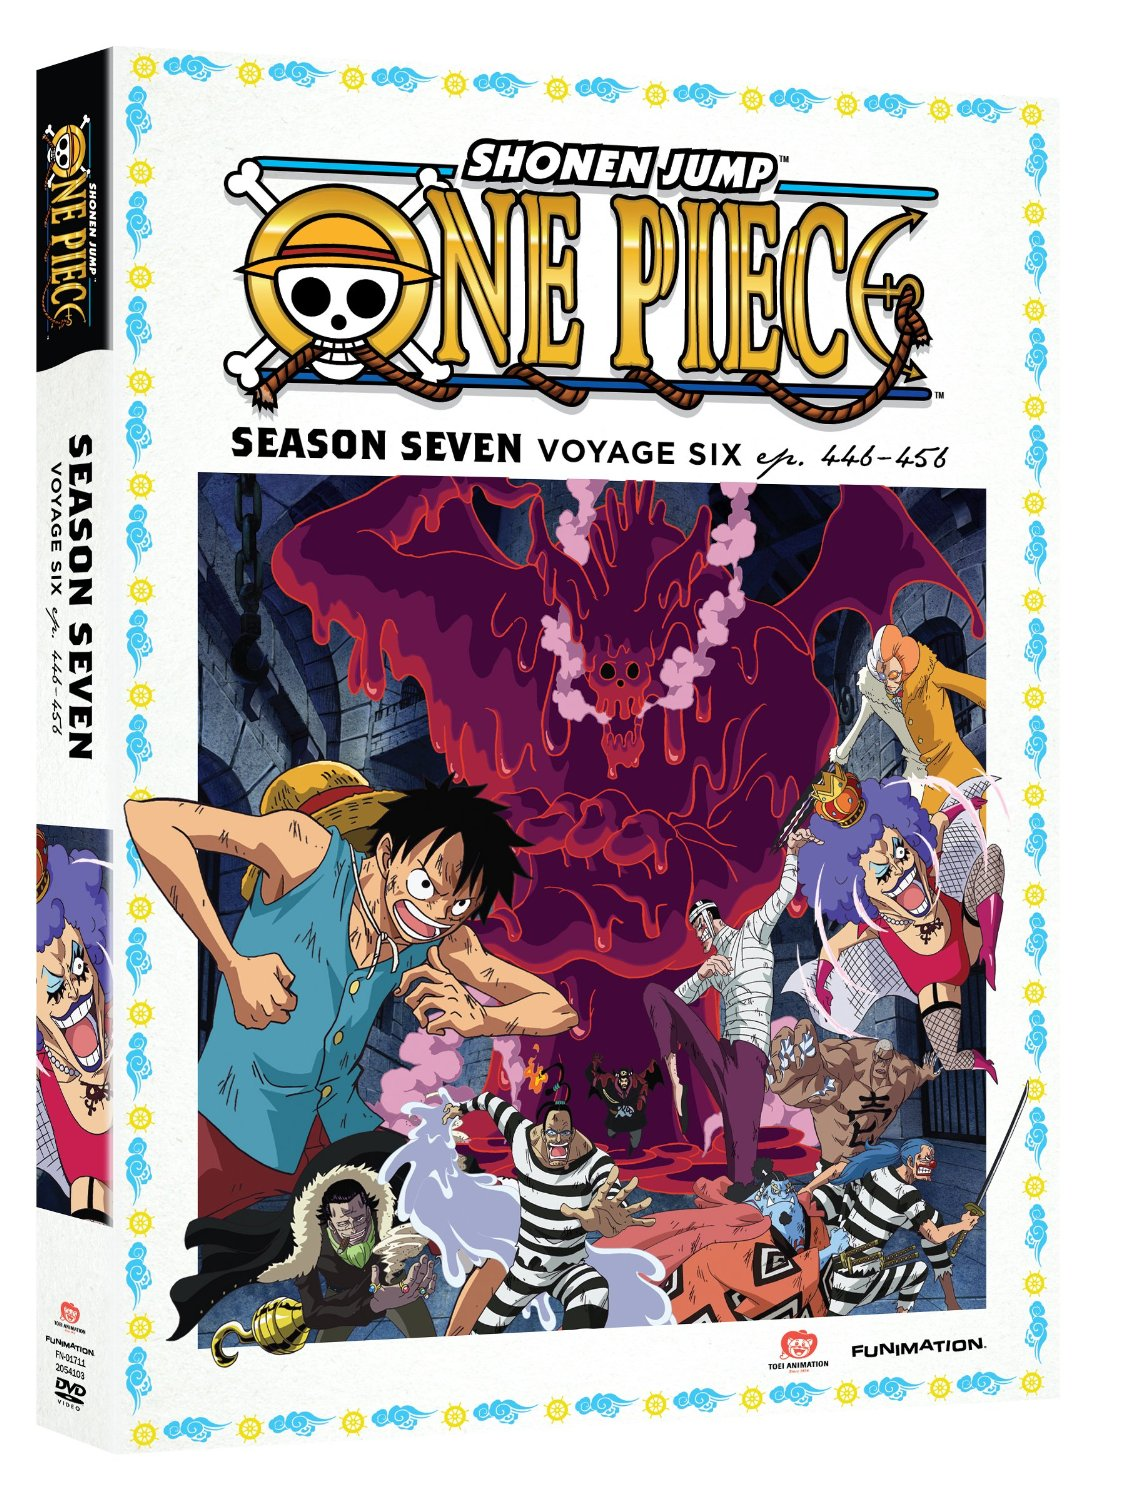 One Piece (season 7) - Wikipedia